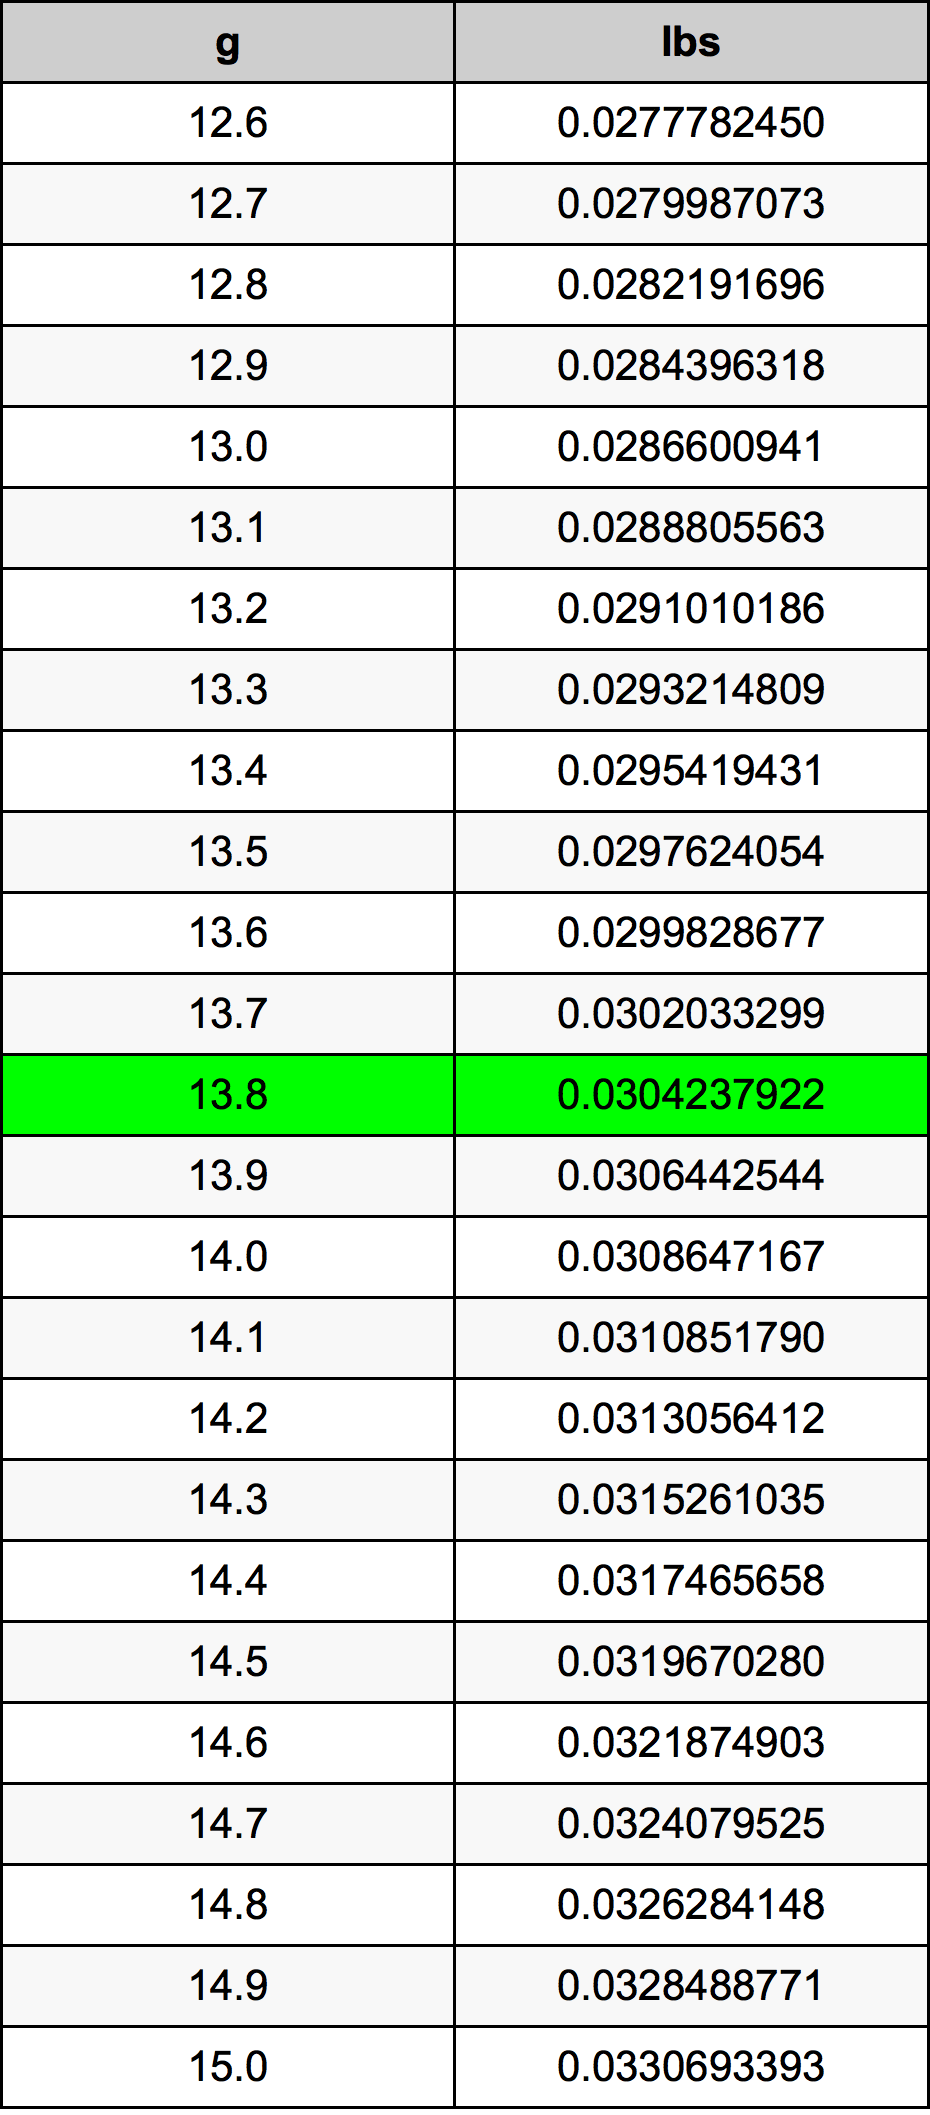 13.8 غرام جدول تحويل